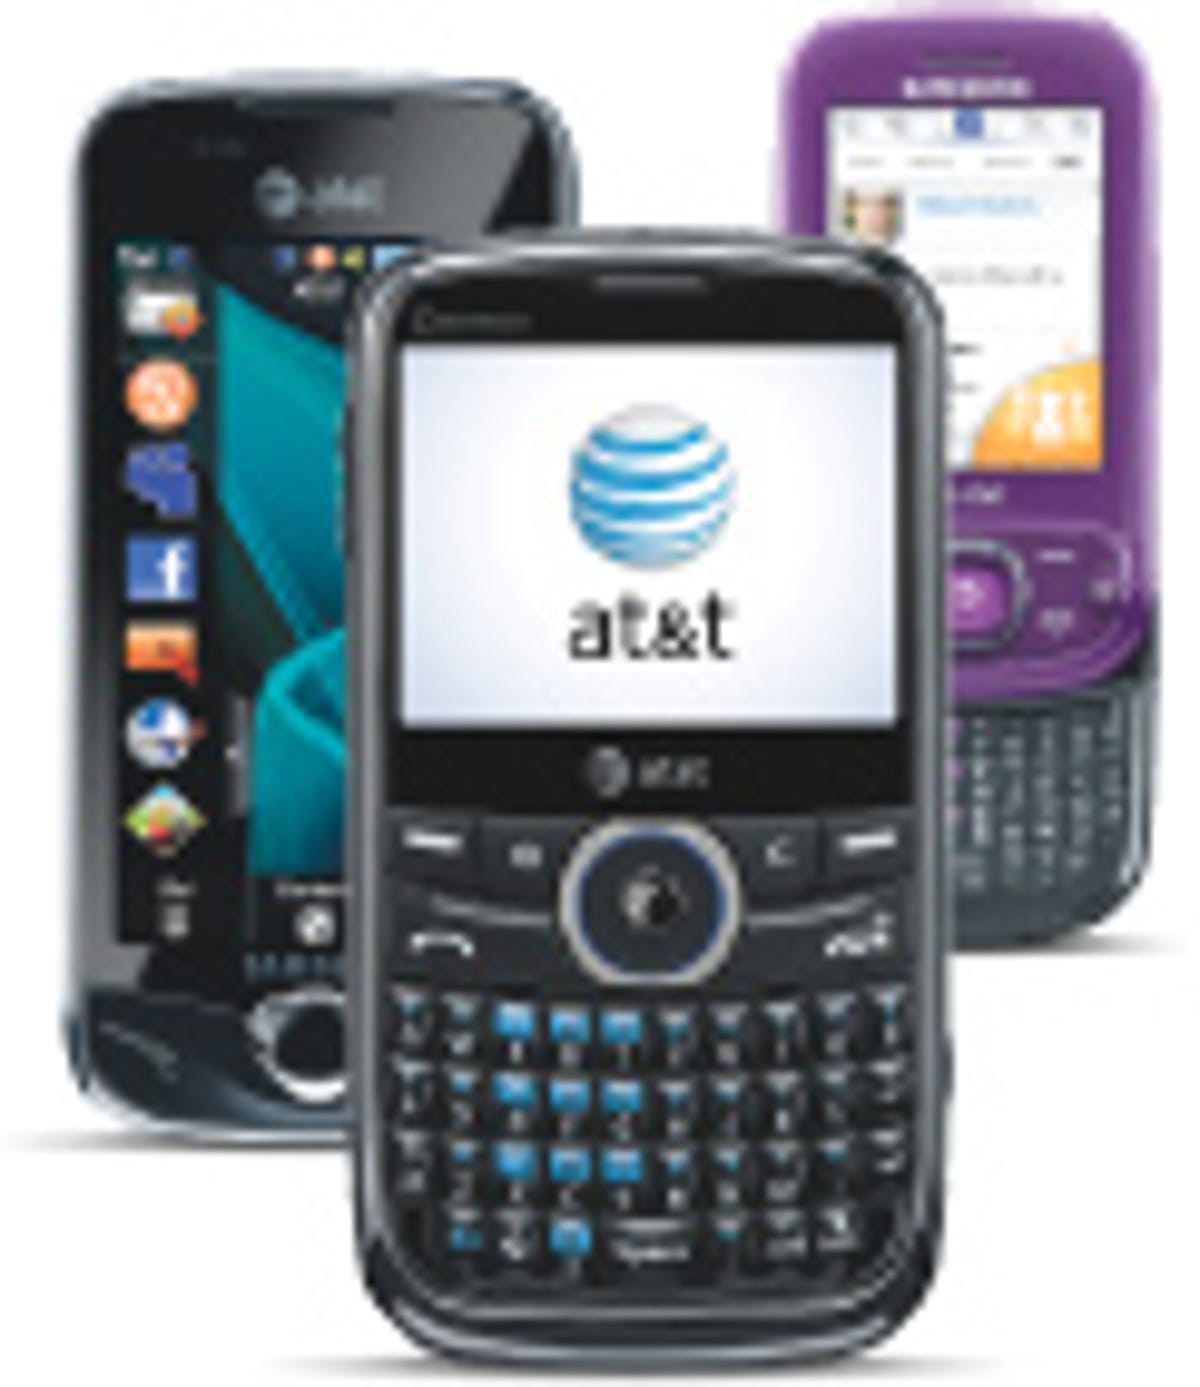 AT&T messaging phones